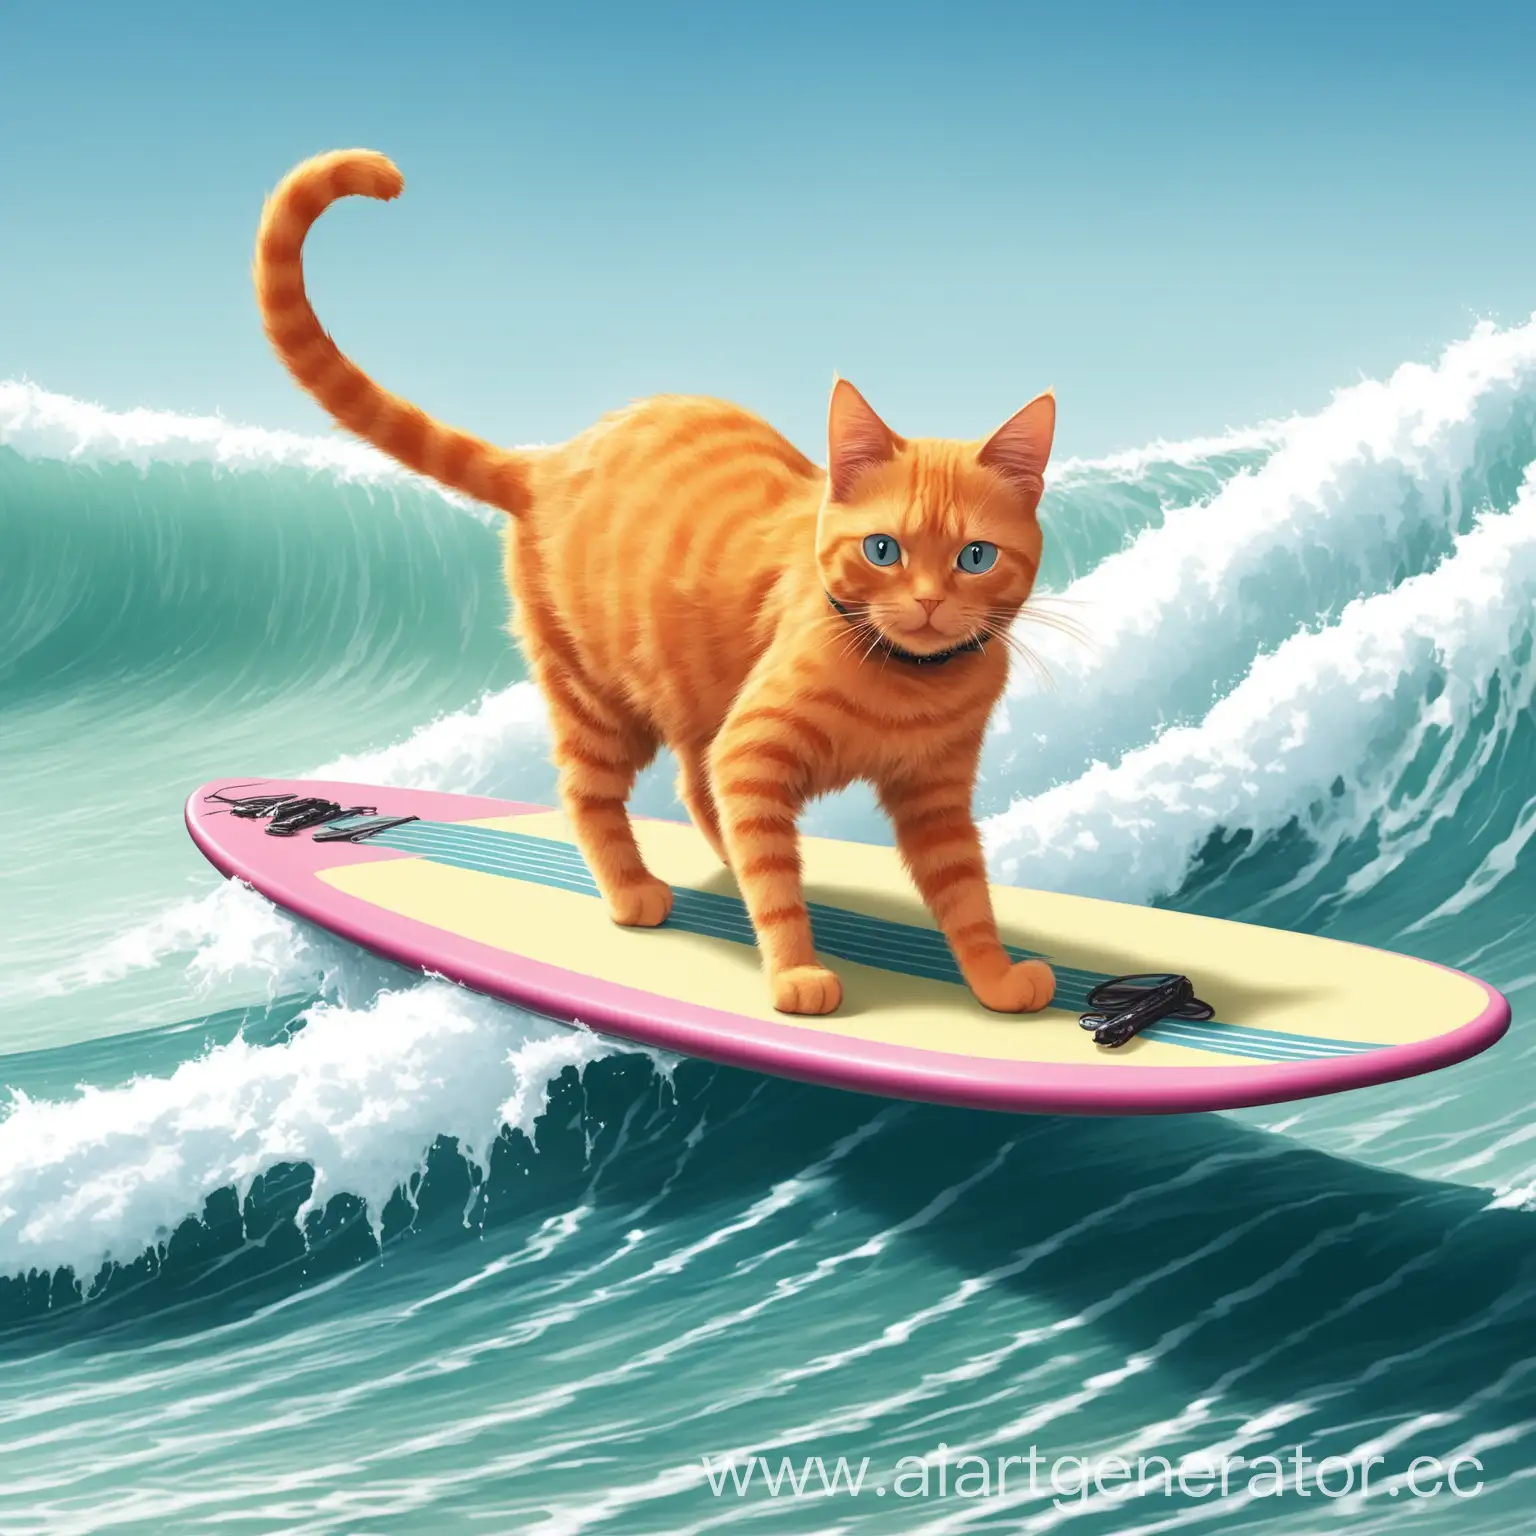 Adventurous-Cat-Riding-a-Surfboard-on-Ocean-Waves